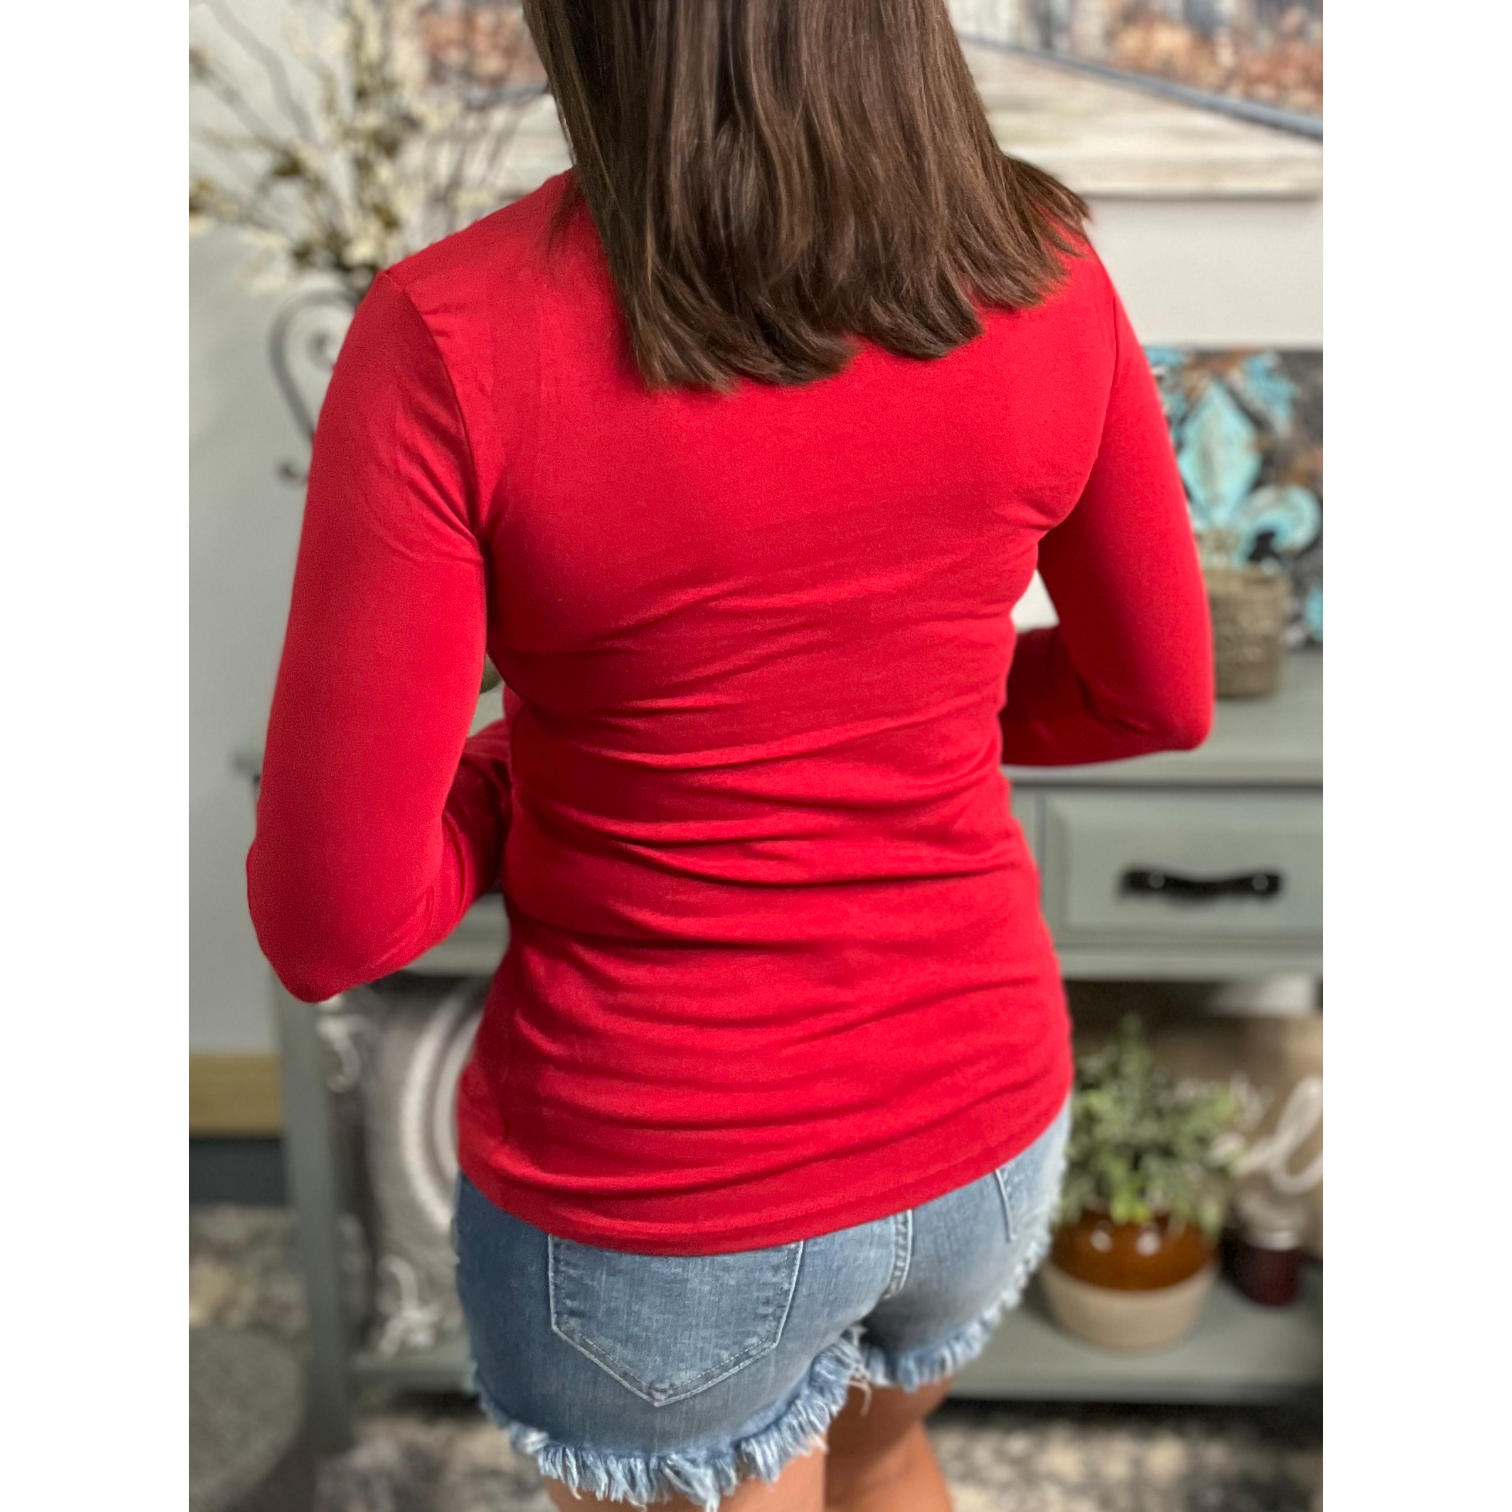 Slimming Round Neck Low Cut Long Sleeve Tissue Basic Baby Shirt Top Dark Red